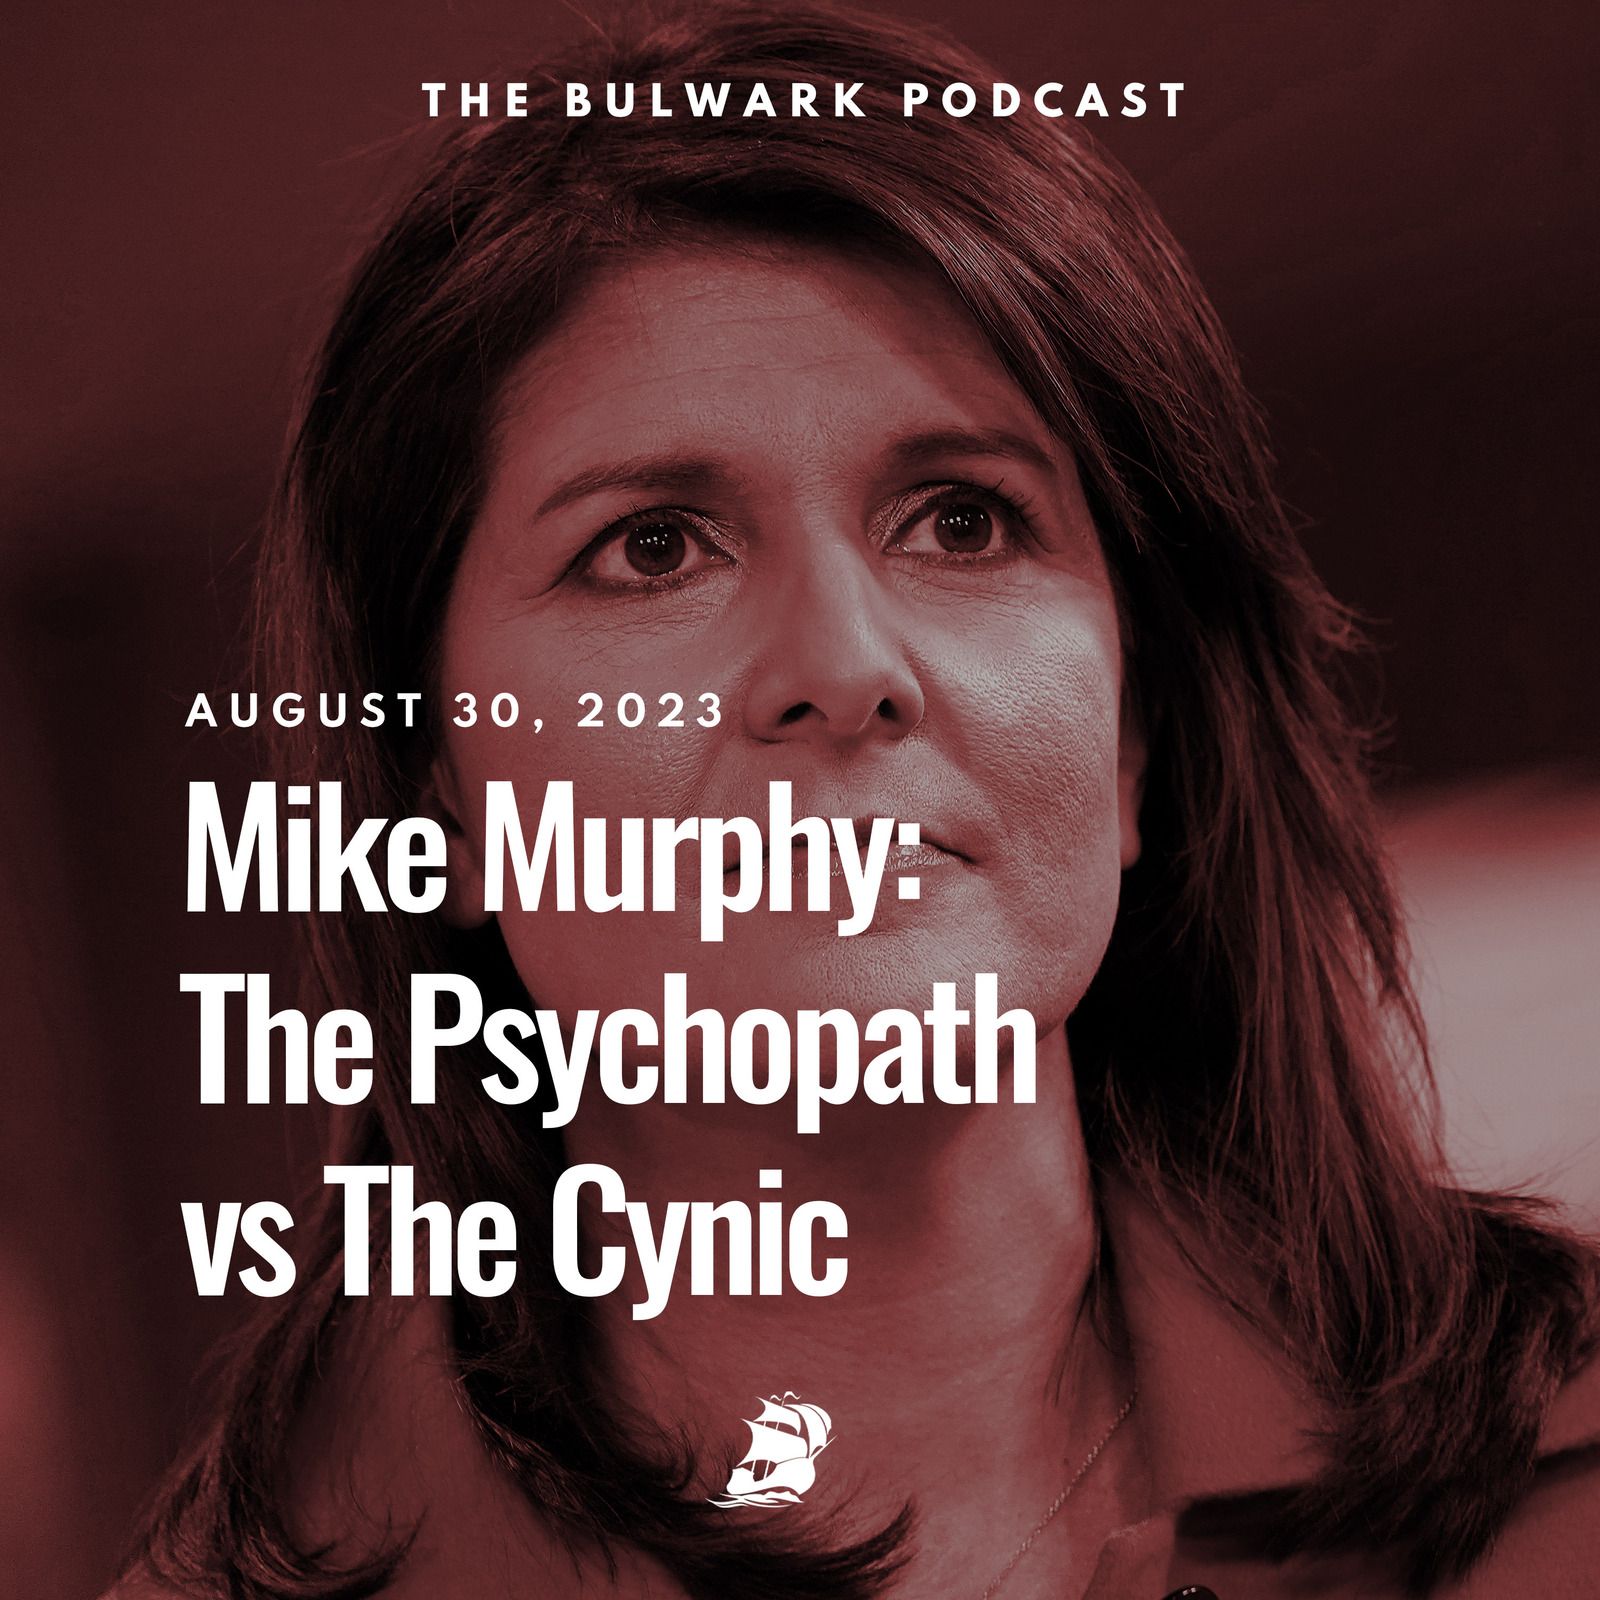 Mike Murphy: The Psychopath vs The Cynic